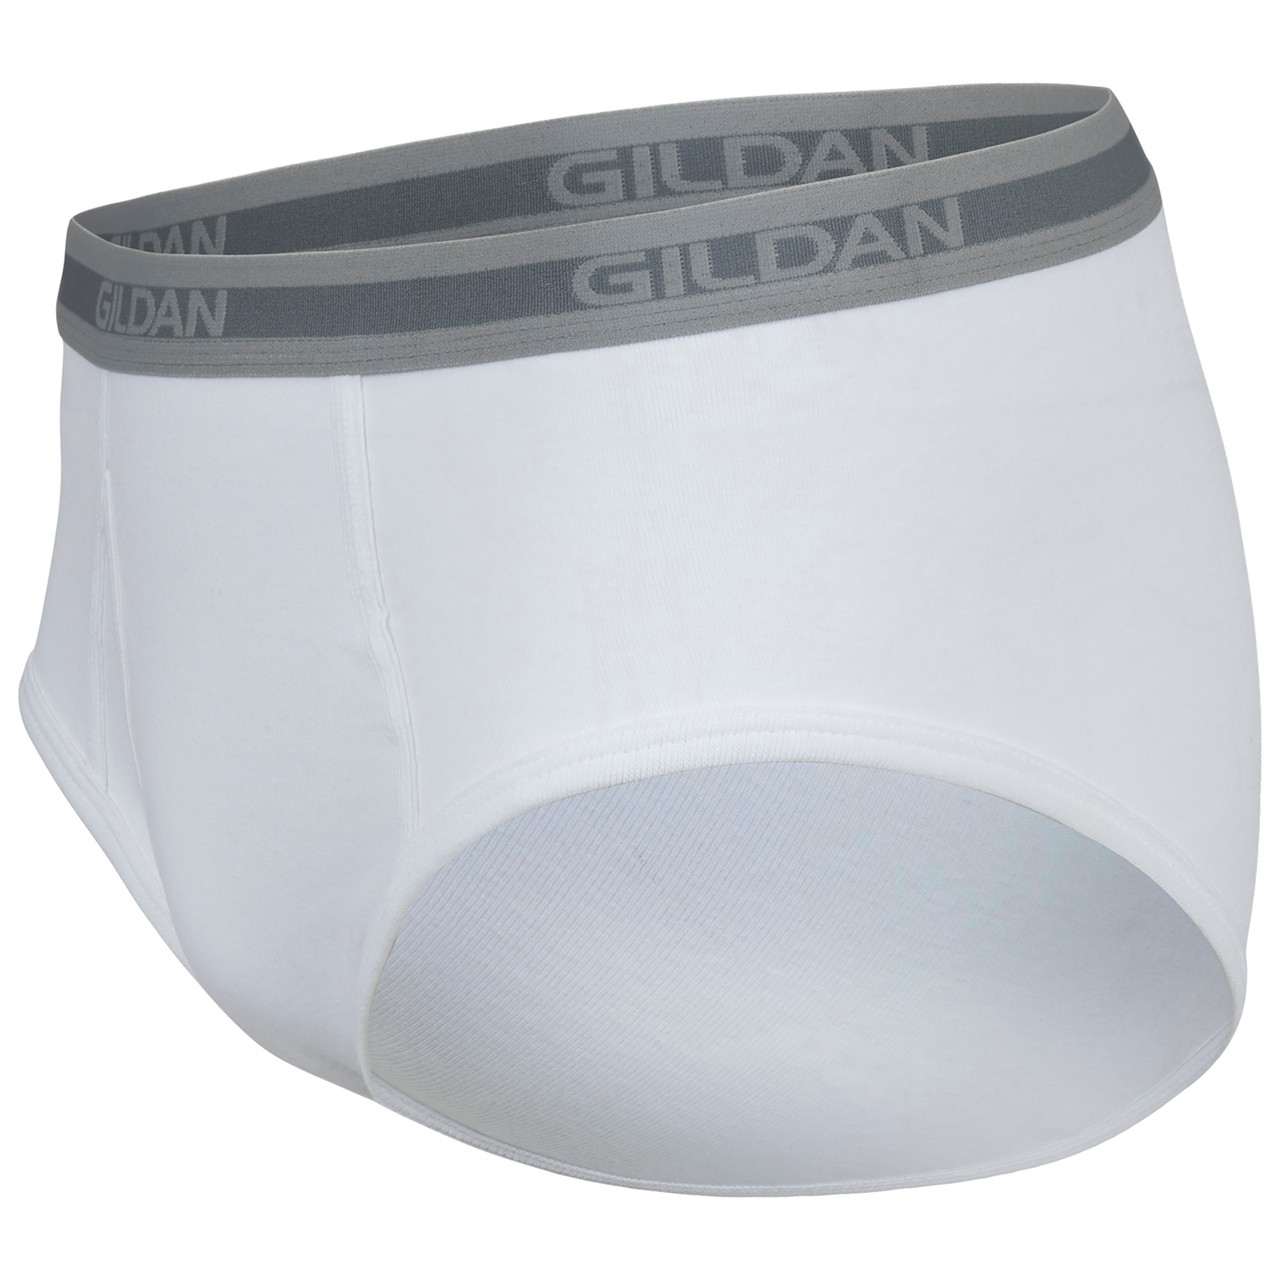 Gildan's Full Collection of Men's Underwear Now on ! - Press